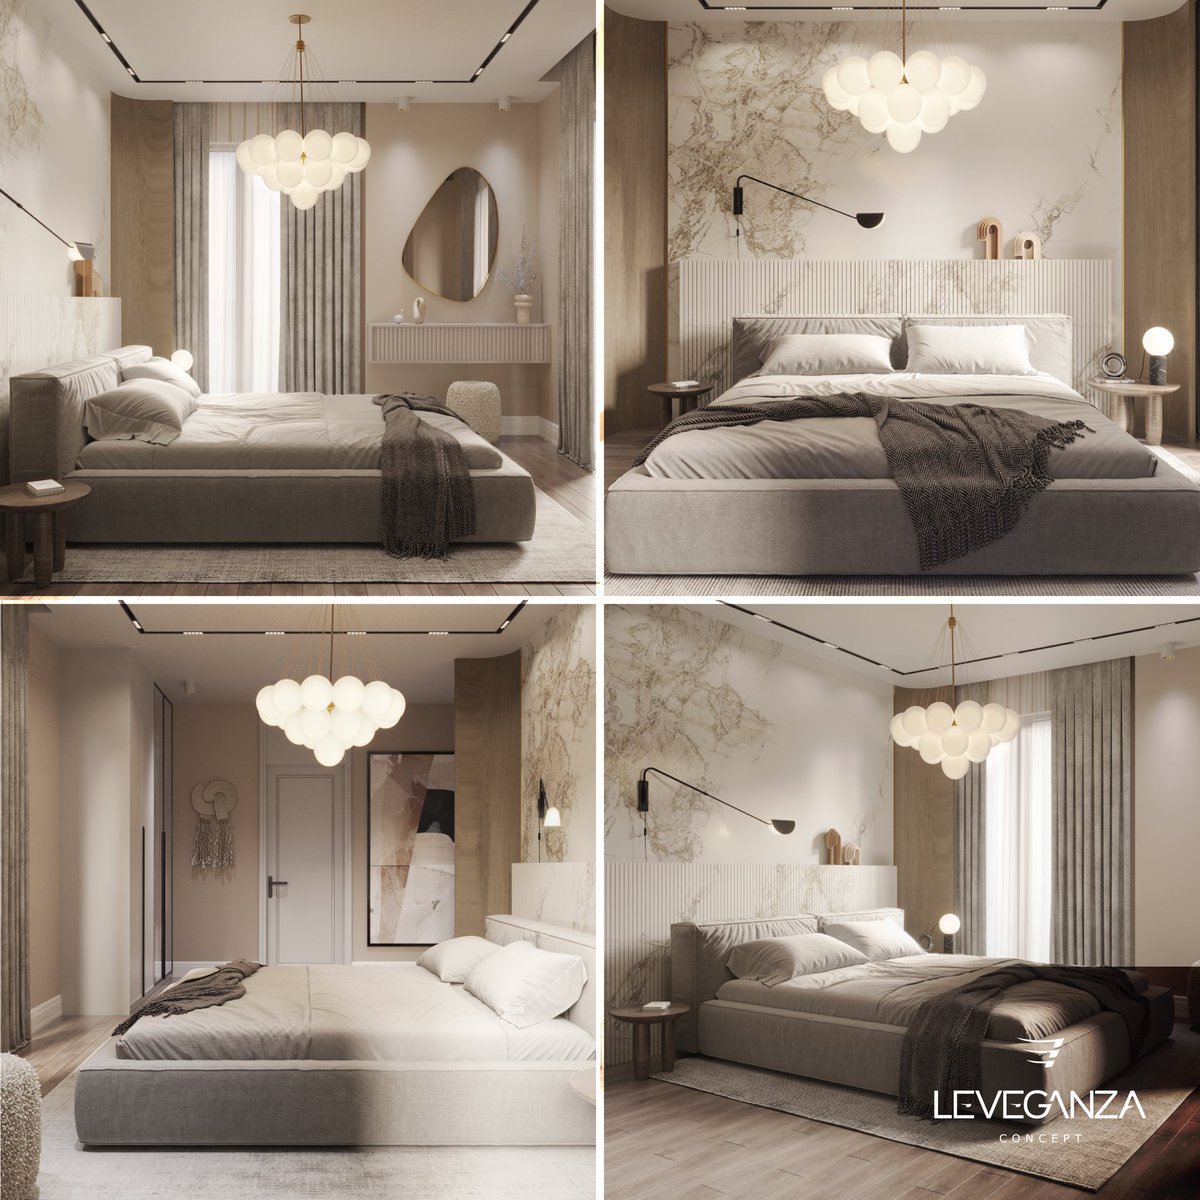 B Block Villa - Bedroom 1. Design 📍Istanbul, Arnavutköy Villas Project 🏡 • Designed By : @Leveganza Project Year : 2023 Location : Istanbul, Turkey 🇹🇷 • 𝐋𝐄𝐕𝐄𝐆𝐀𝐍𝐙𝐀.. you Dream and we Design ⚜️ • #Leveganza #concept #interiordesign #decor #design #interior #villa